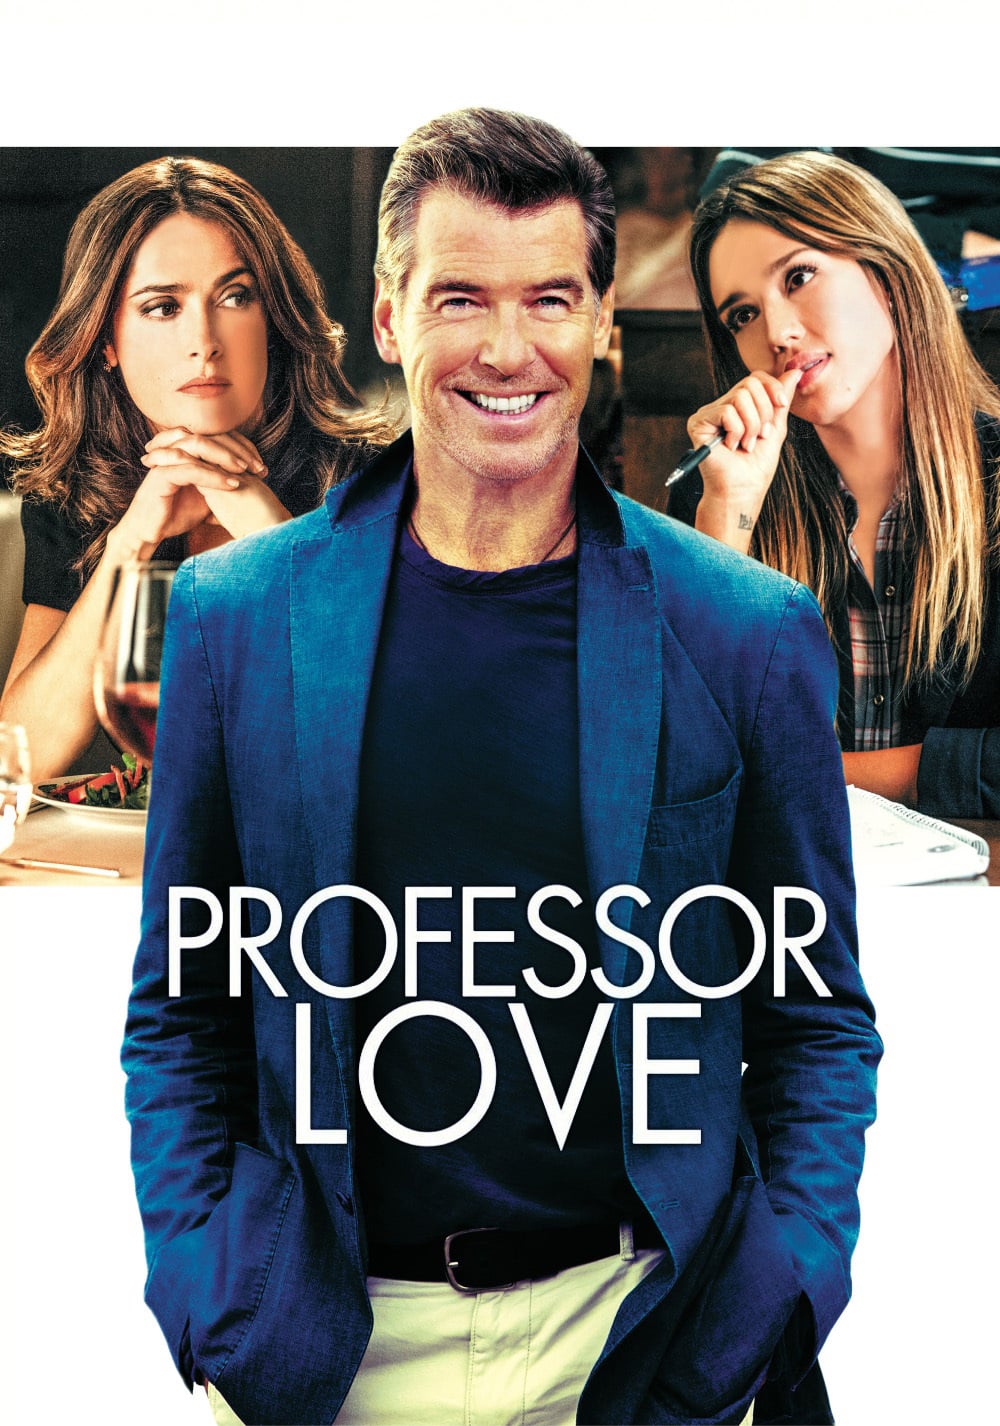 Plakat von "Professor Love"